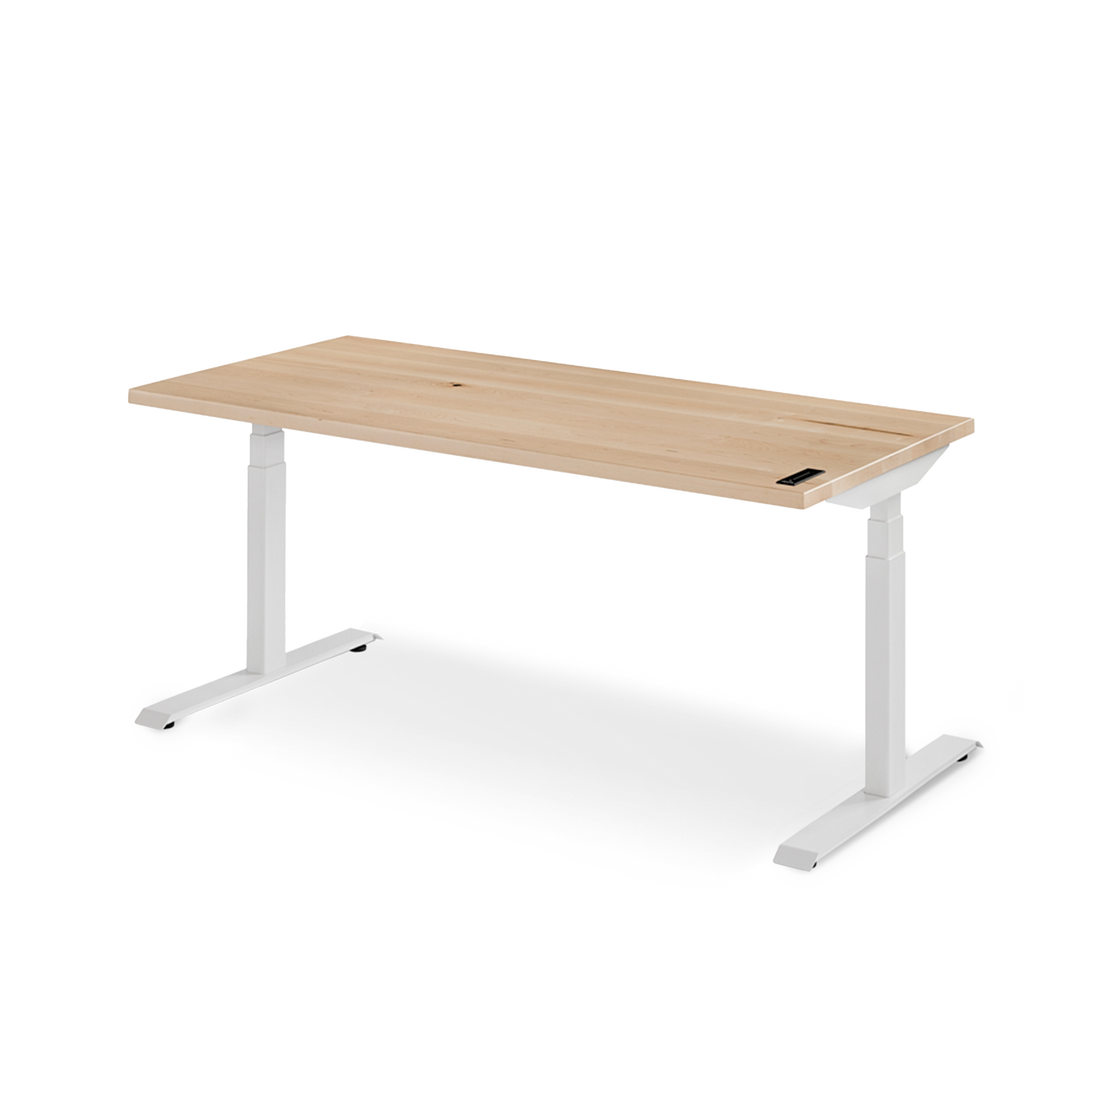 The Sway Standing Desk in Maple - ergonofis